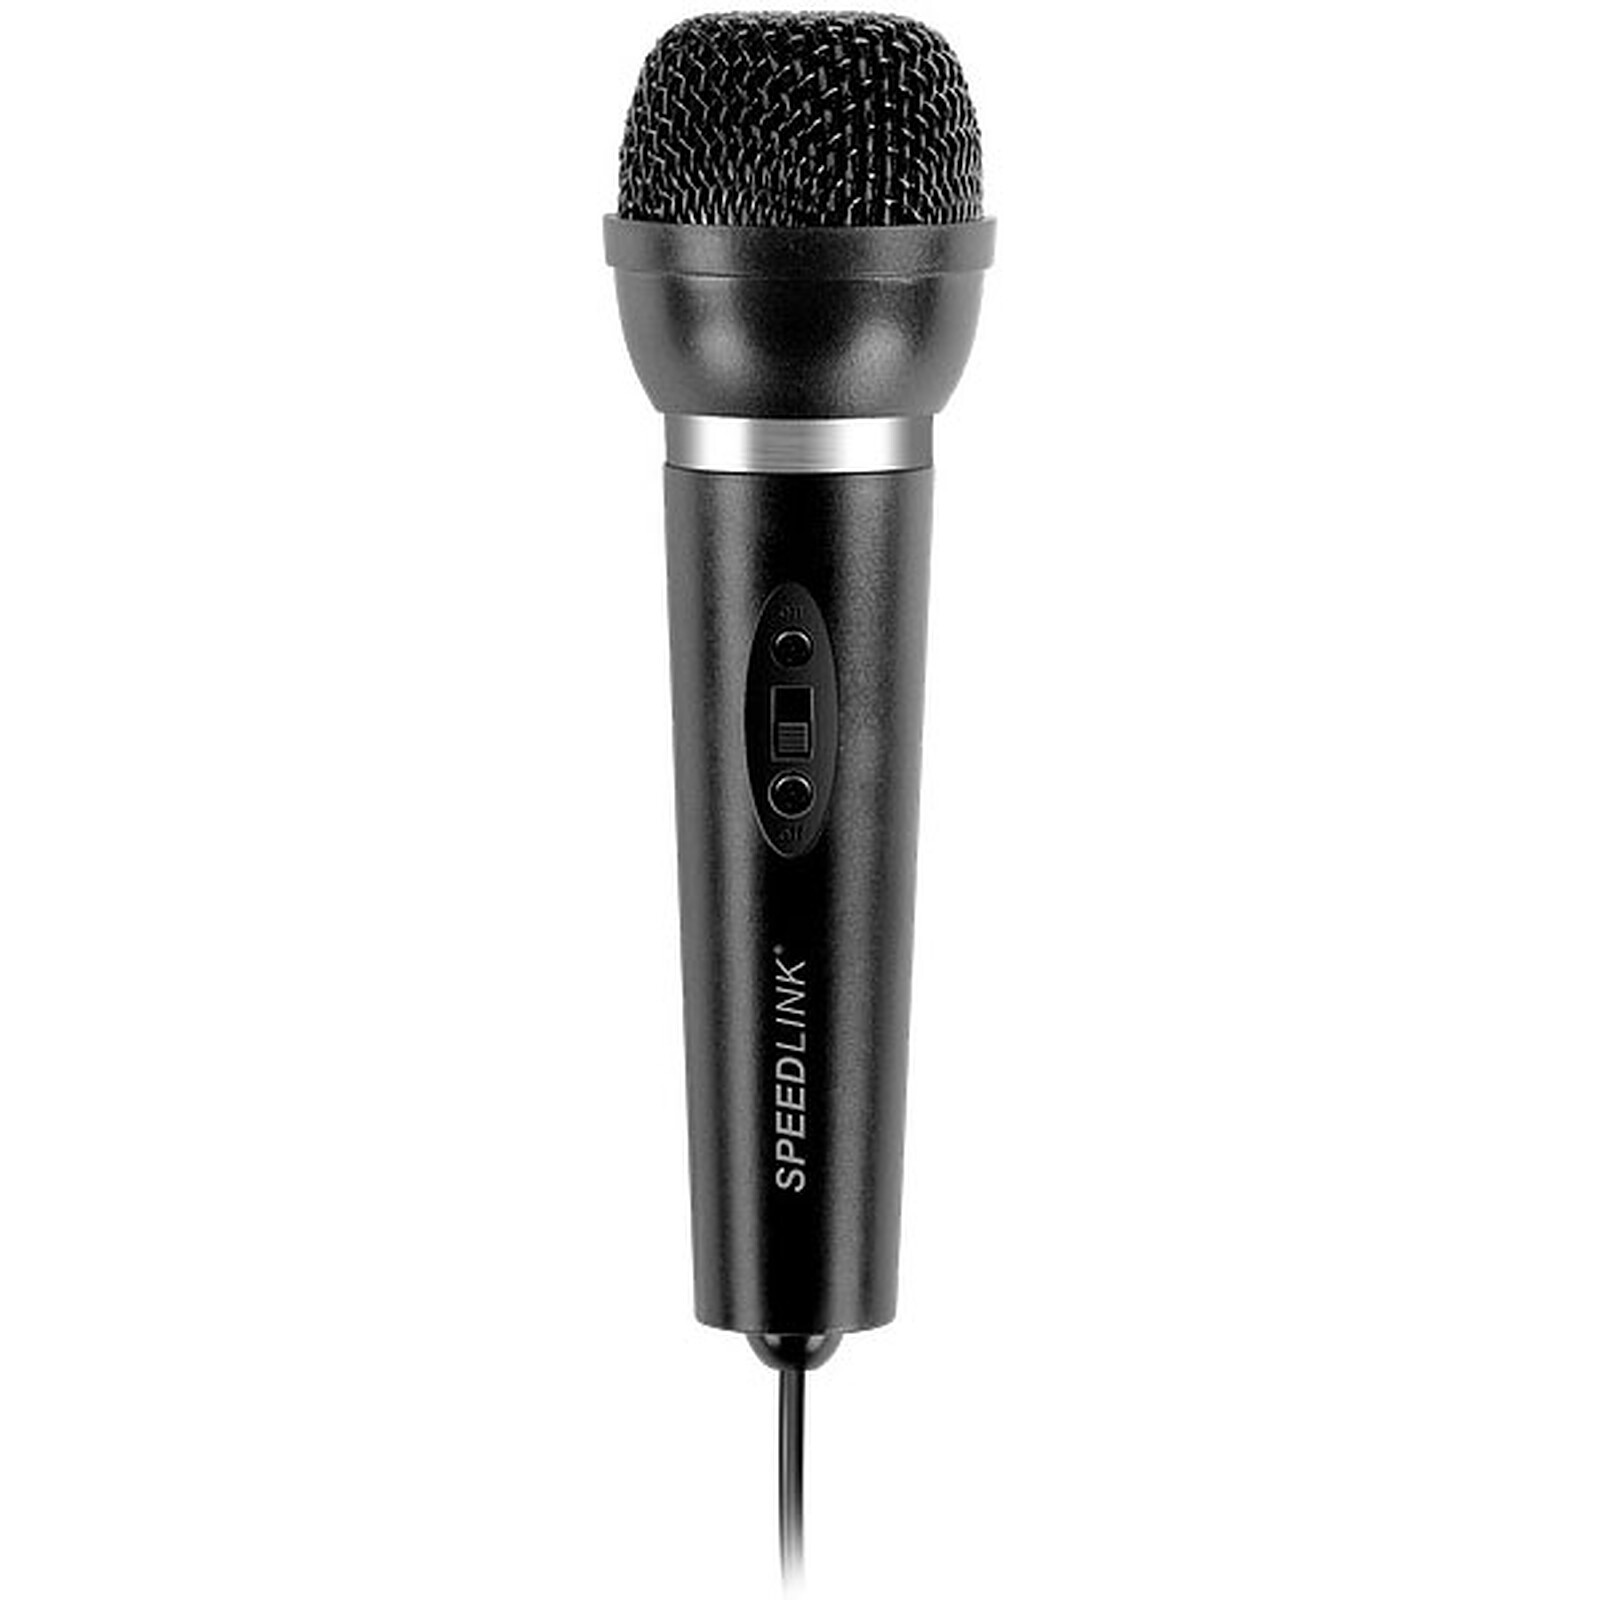 Speedlink Capo (USB) - Microphone - Garantie 3 ans LDLC